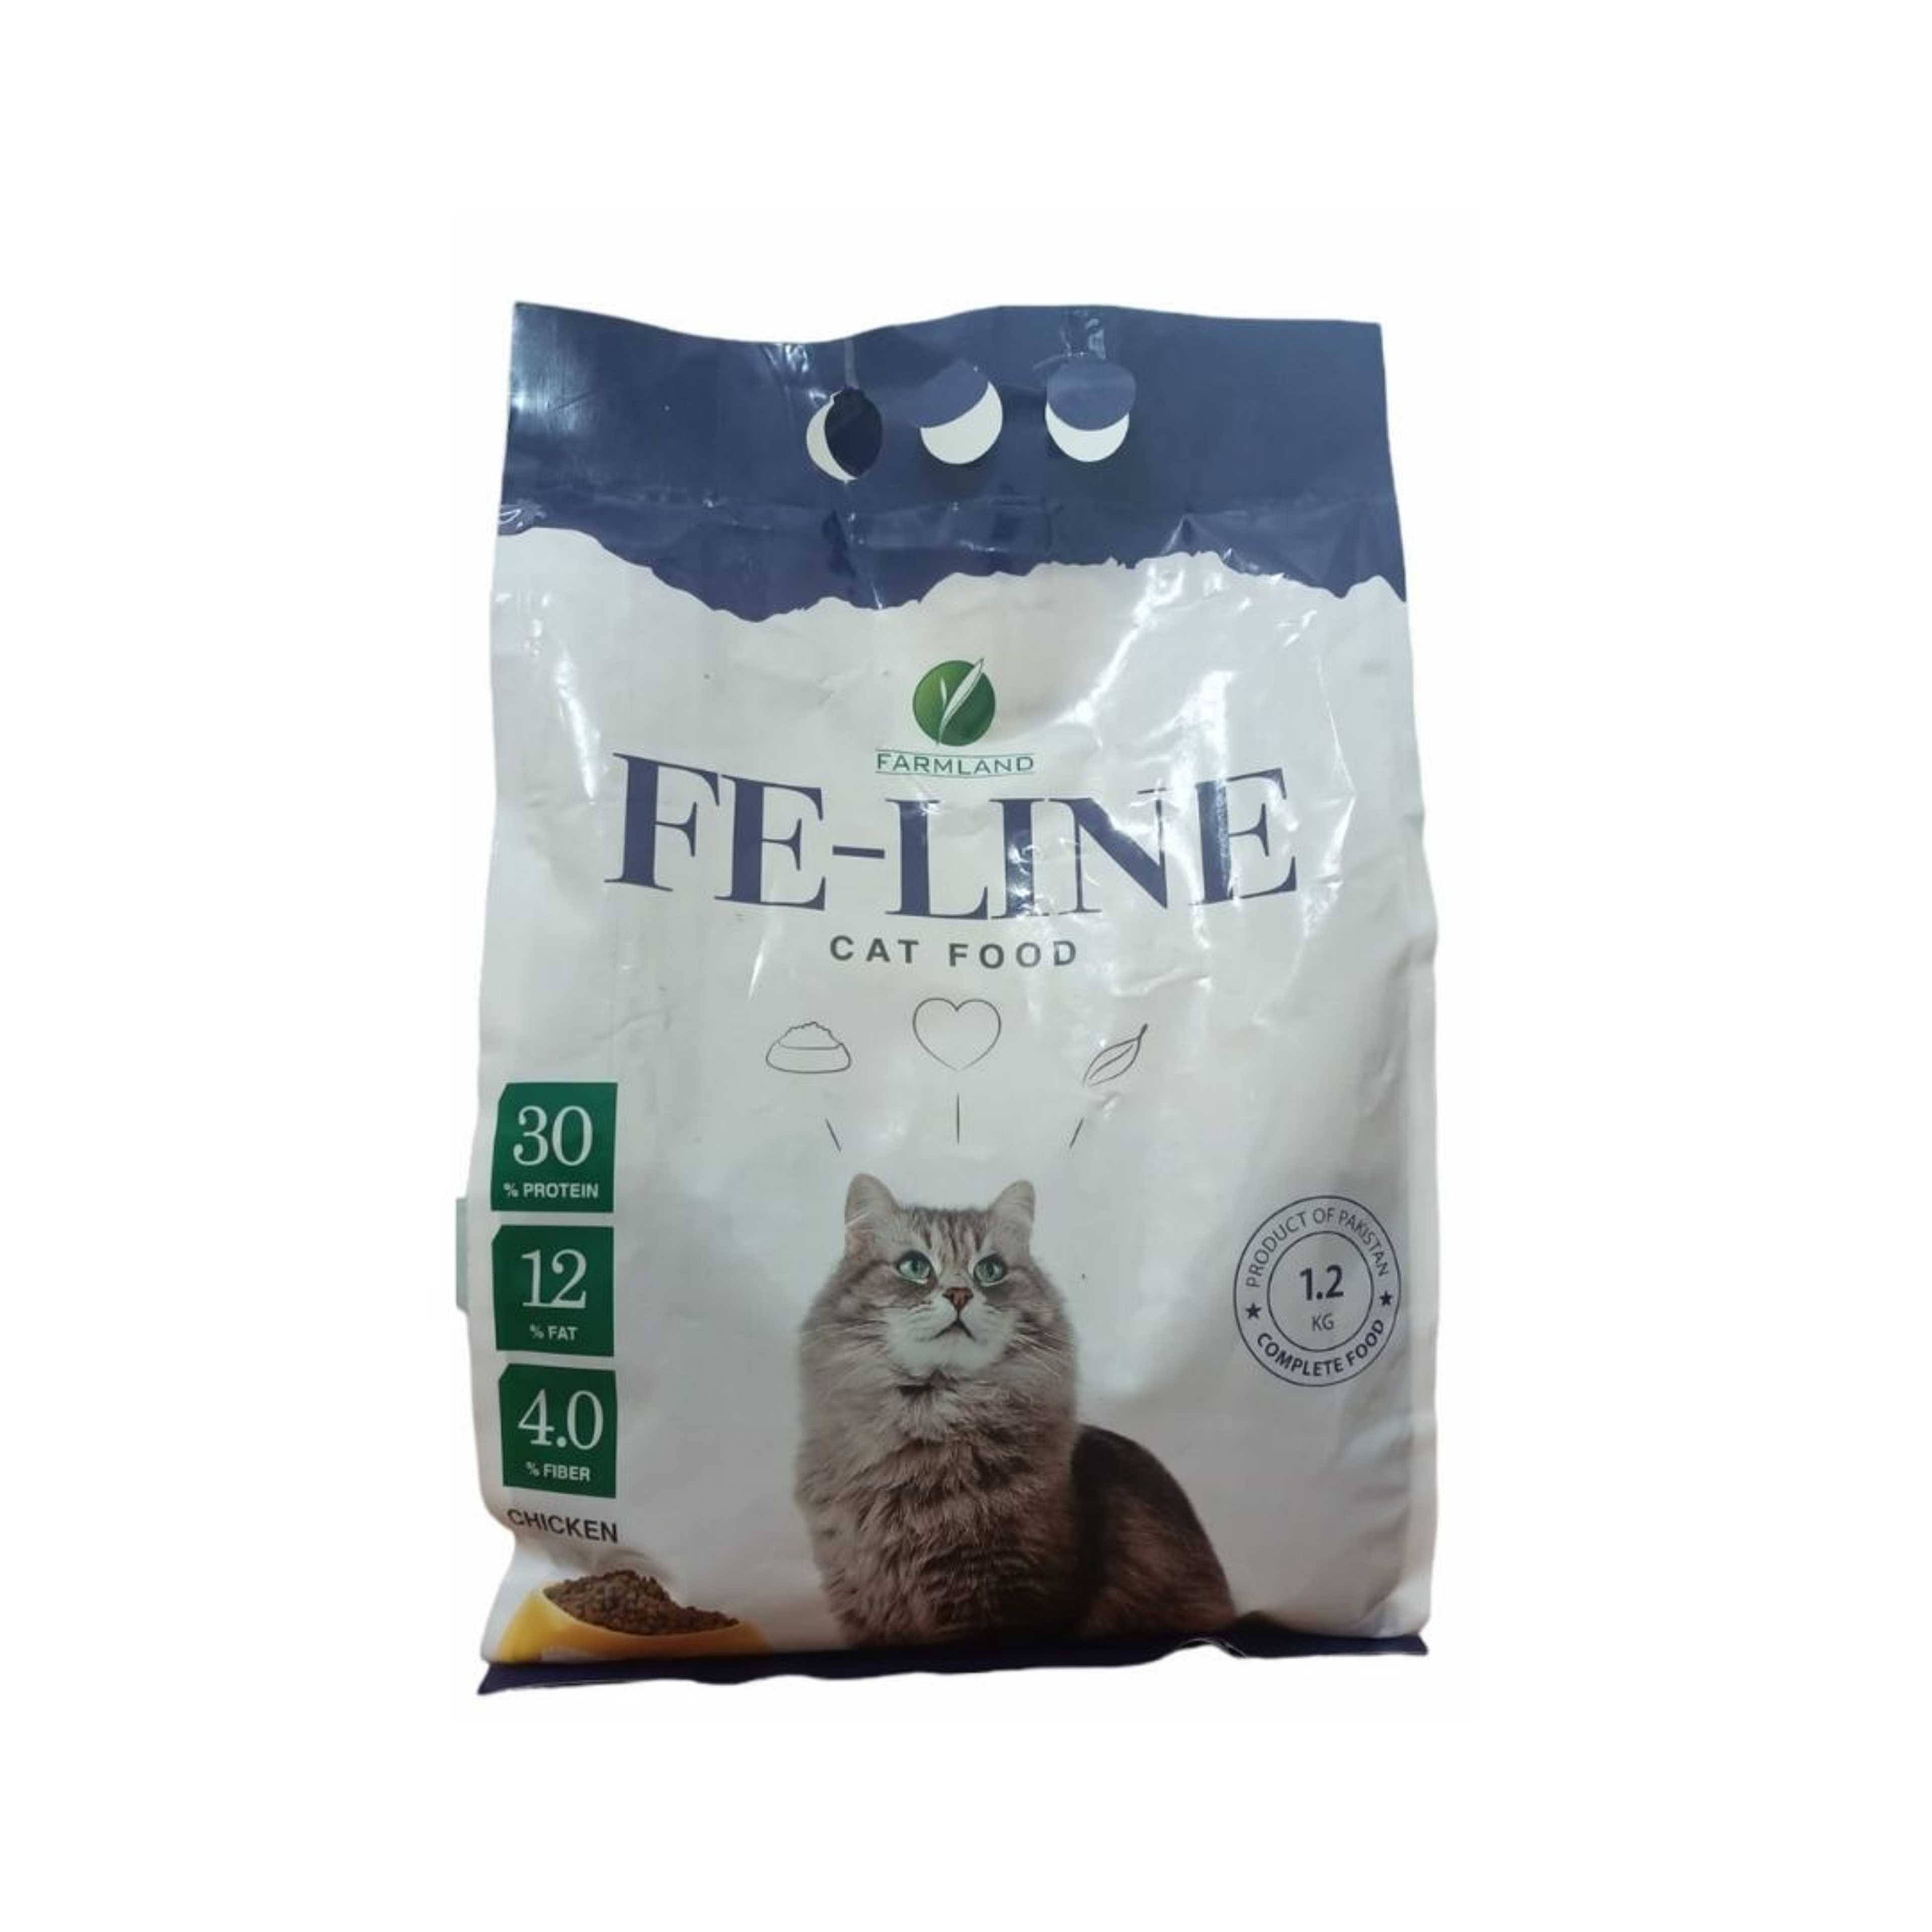 Feline Cat Food 1.2kg Chicken and Fish Flavour -Best Economical Cat Food